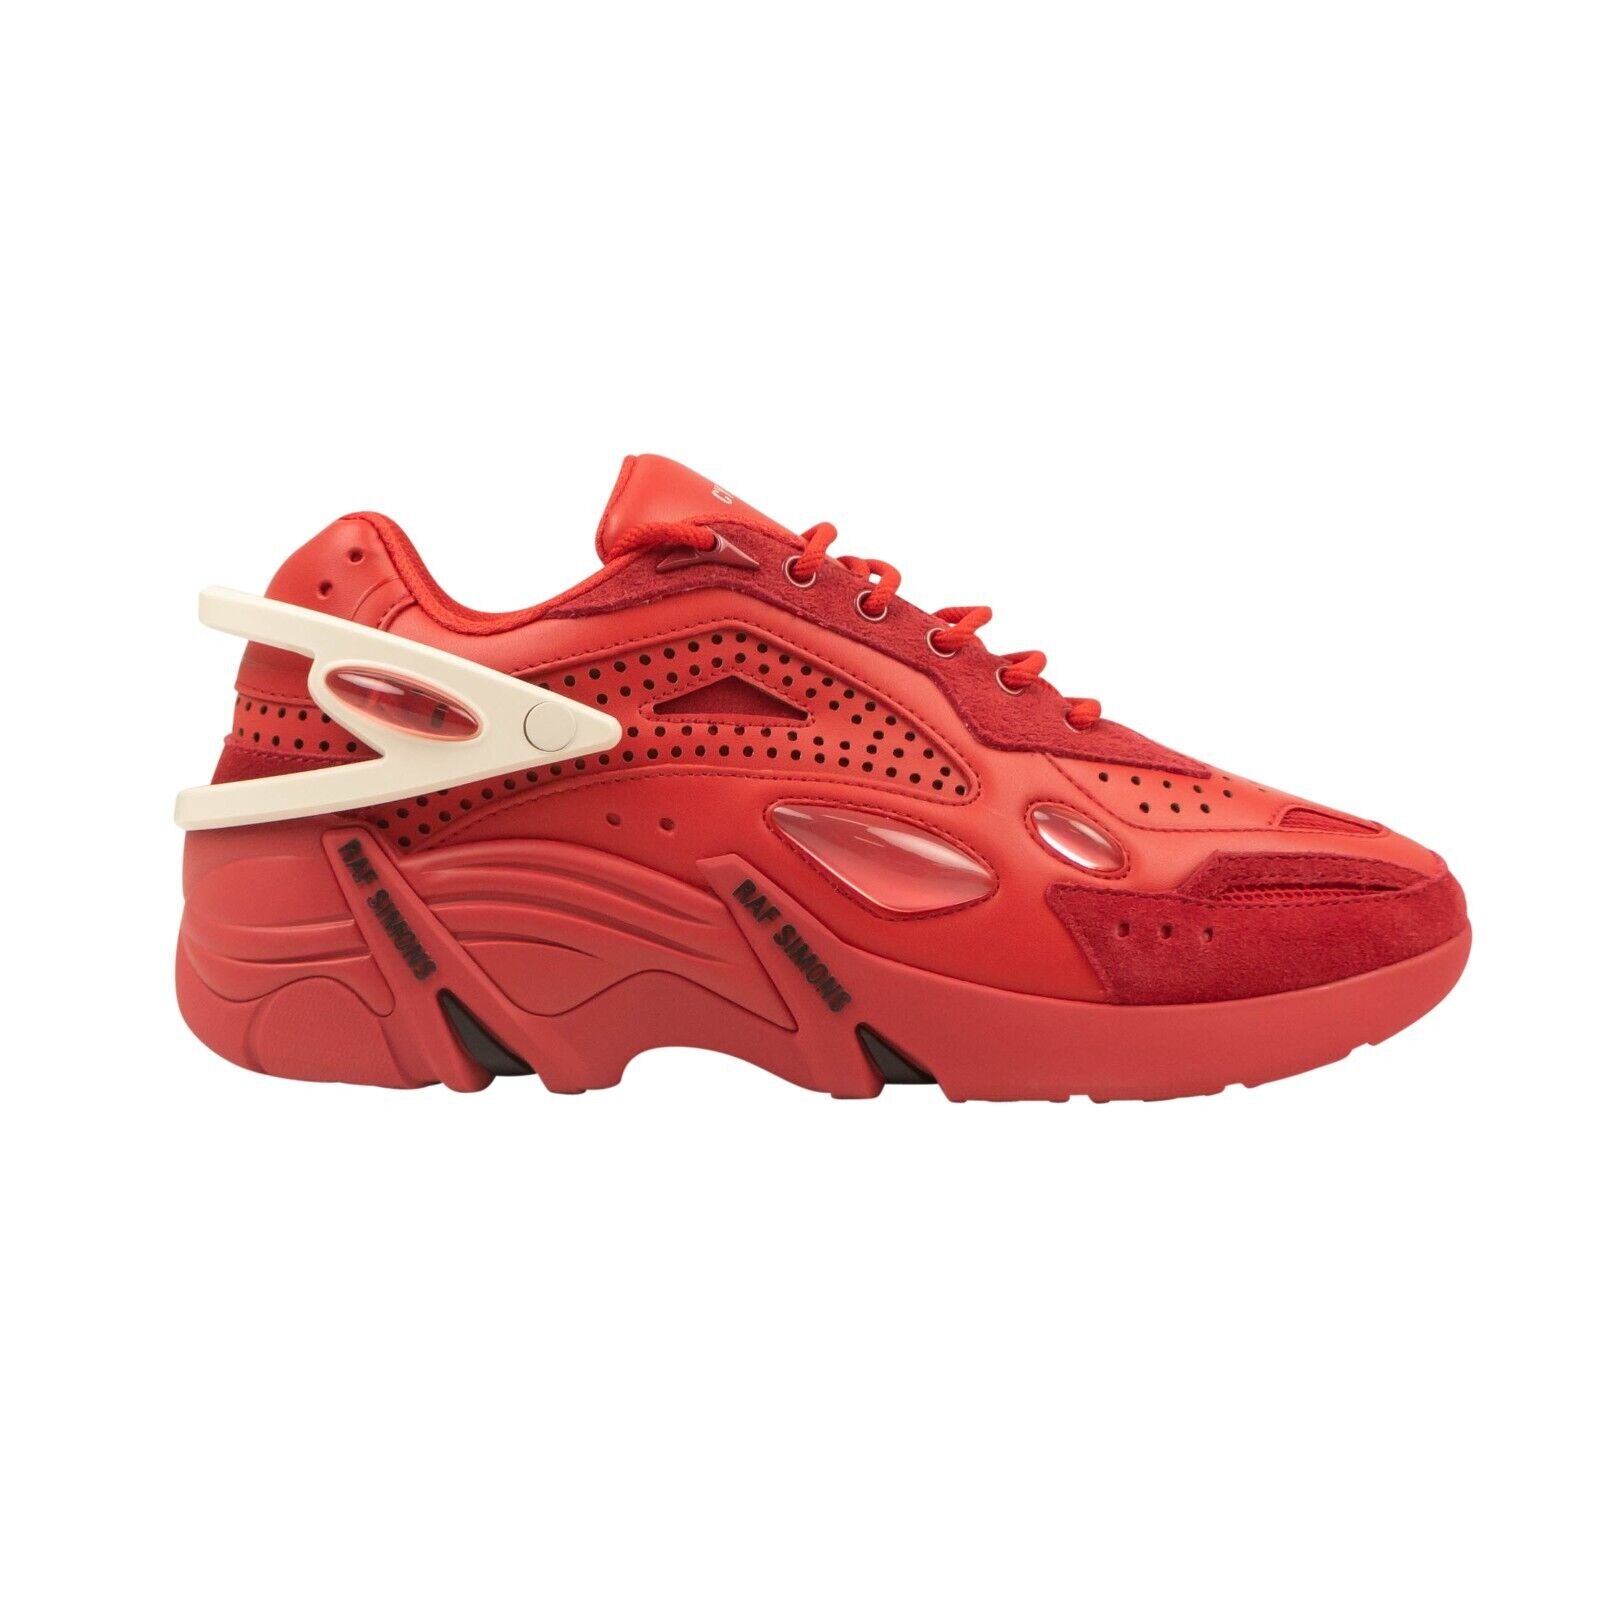 Raf Simons Cyclon 21 Sneakers - Red